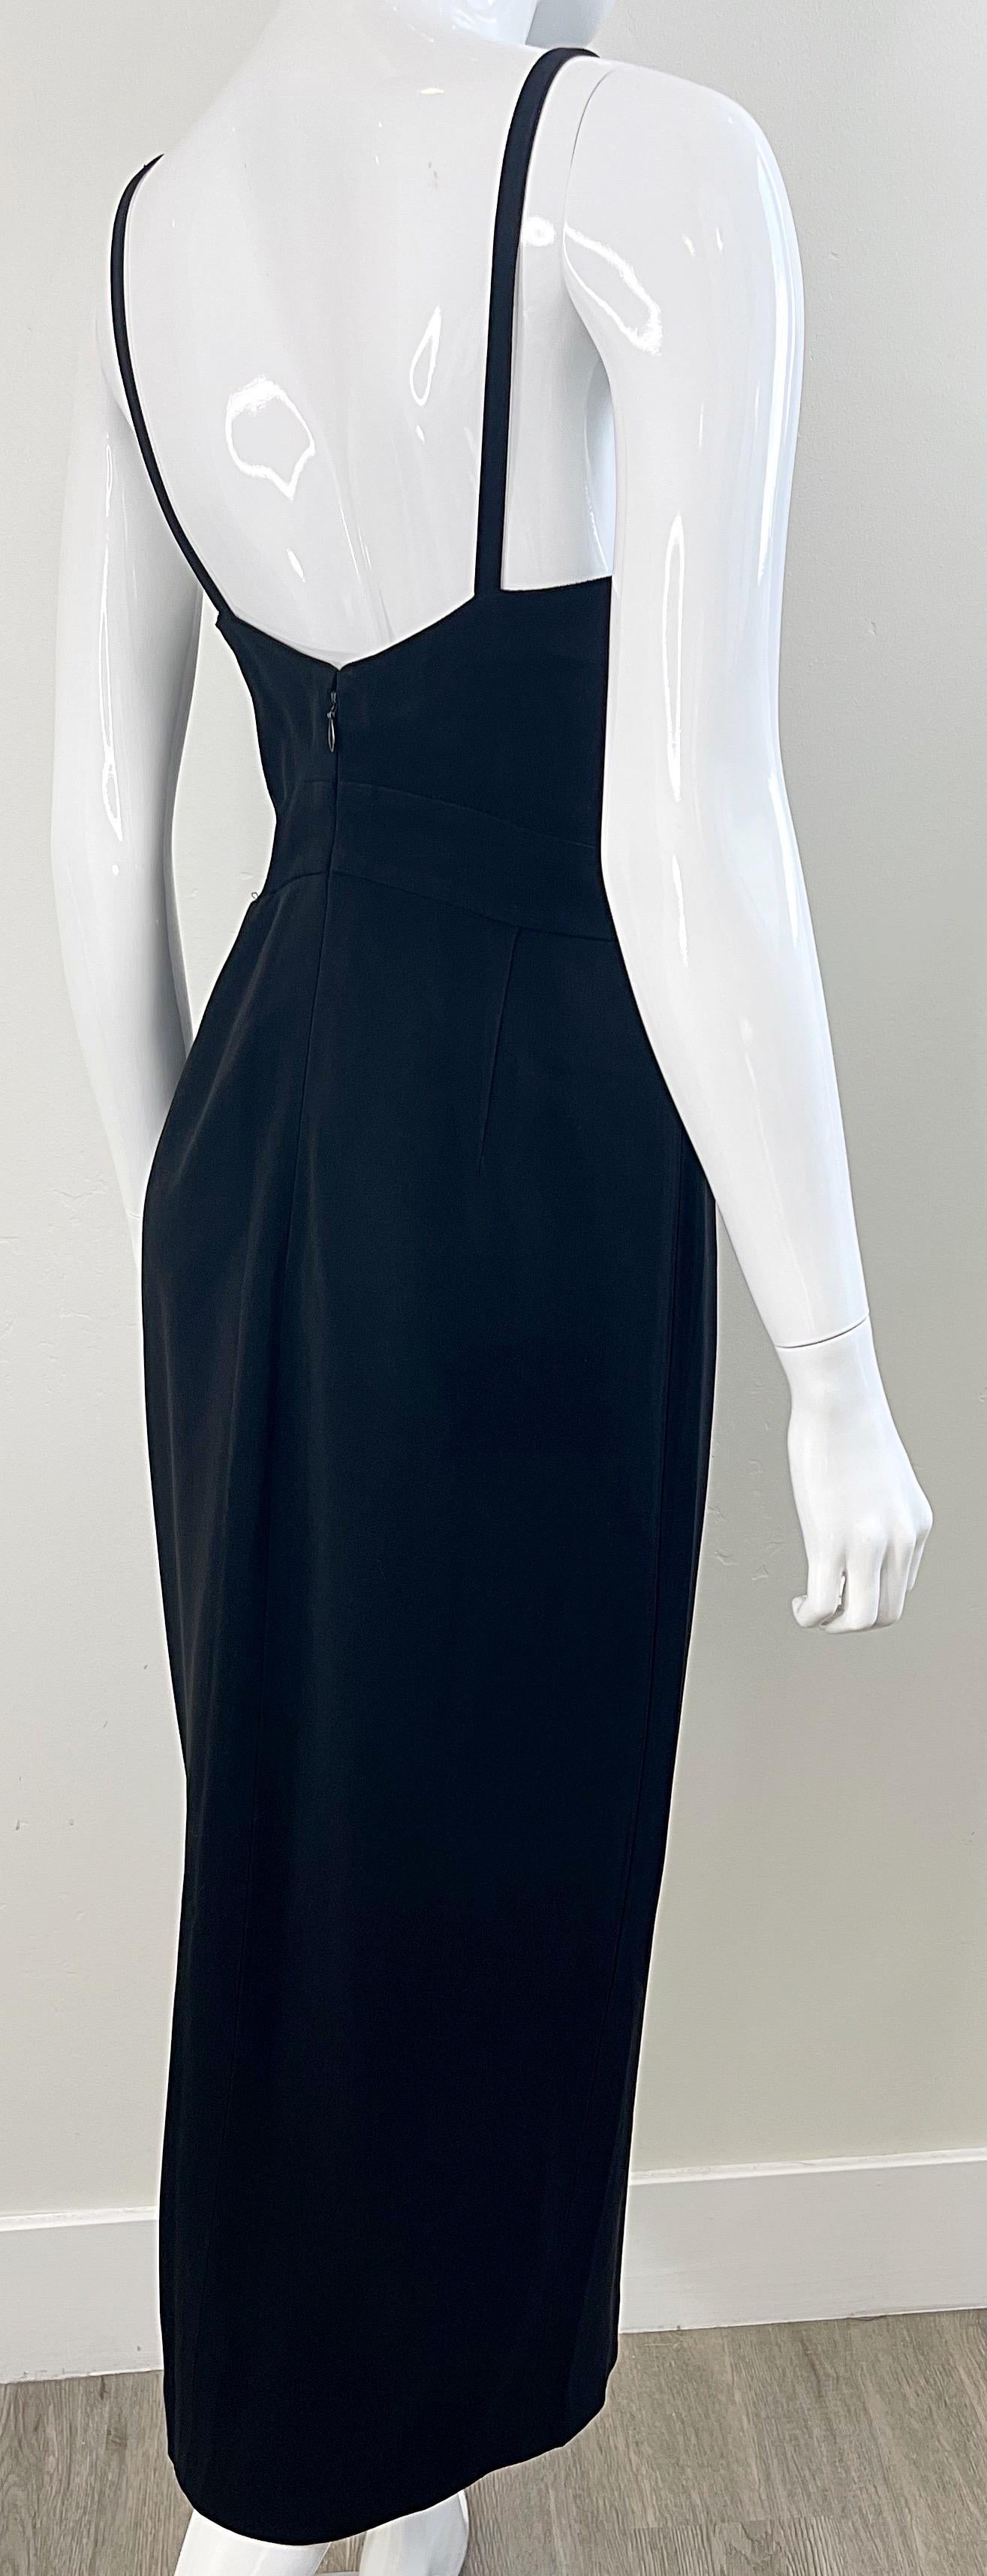 Women's Karl Lagerfeld 1990s Black Sleeveless Timeless Black Vintage 90s Gown Maxi Dress For Sale